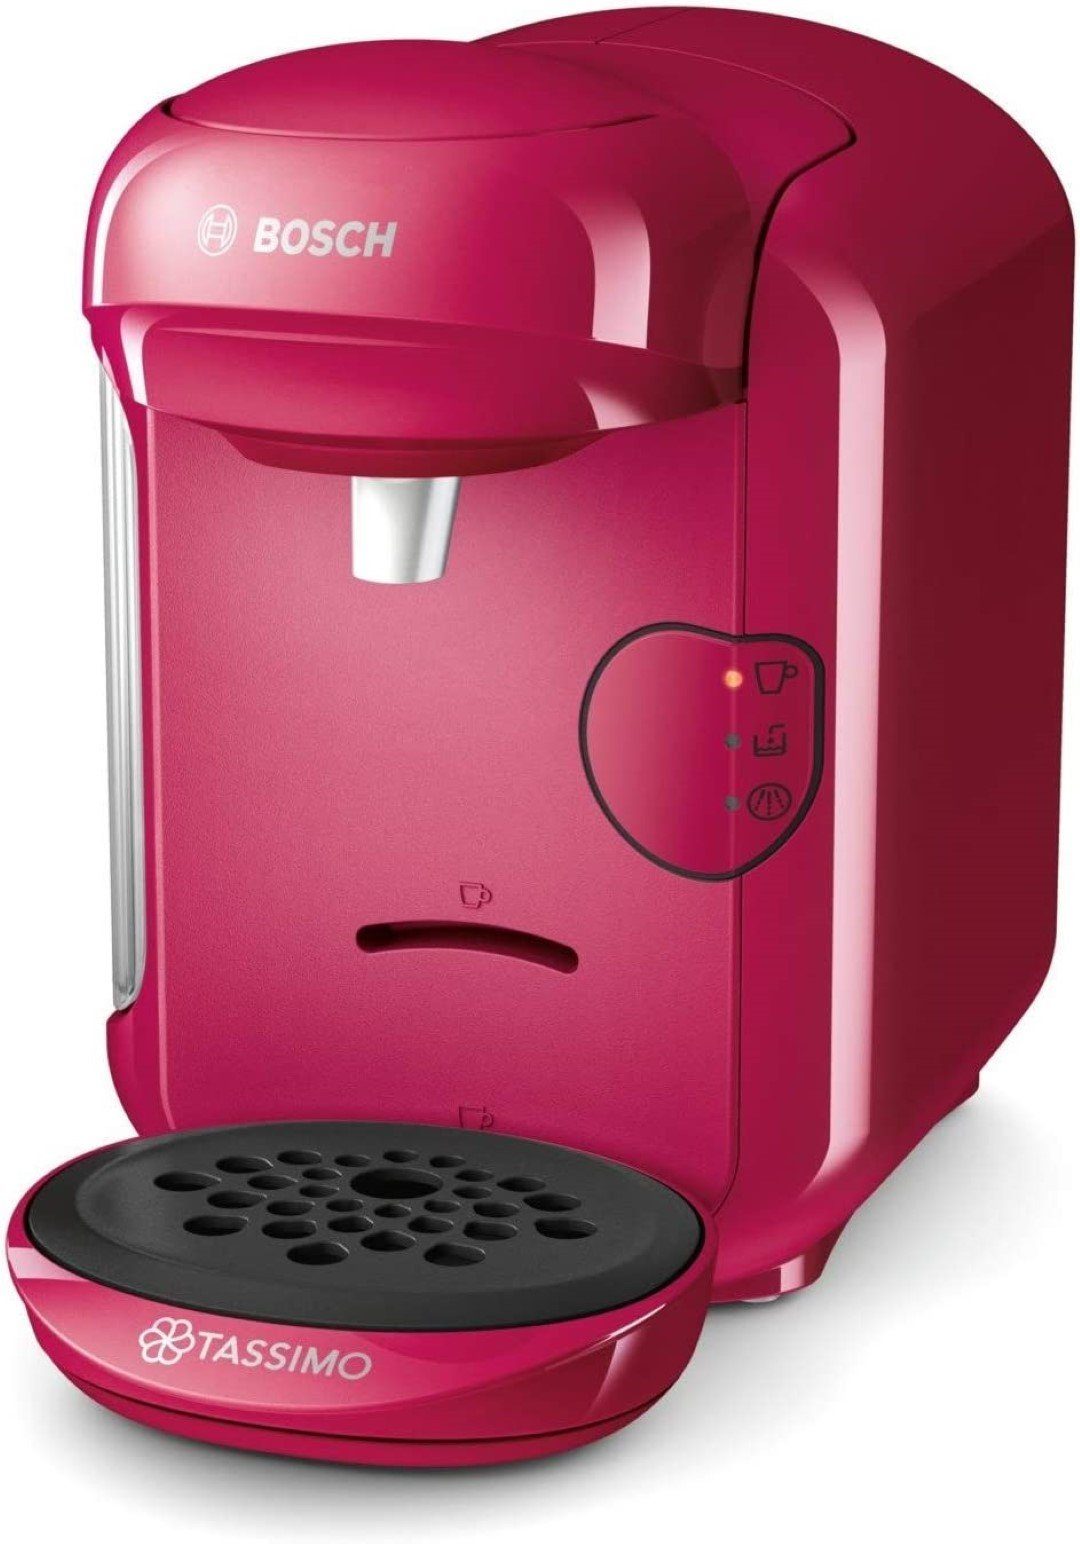 TASSIMO Kapsel-/Kaffeepadmaschine Bosch Tassimo Vivy2 Kapselmaschine  TAS1401, kompak